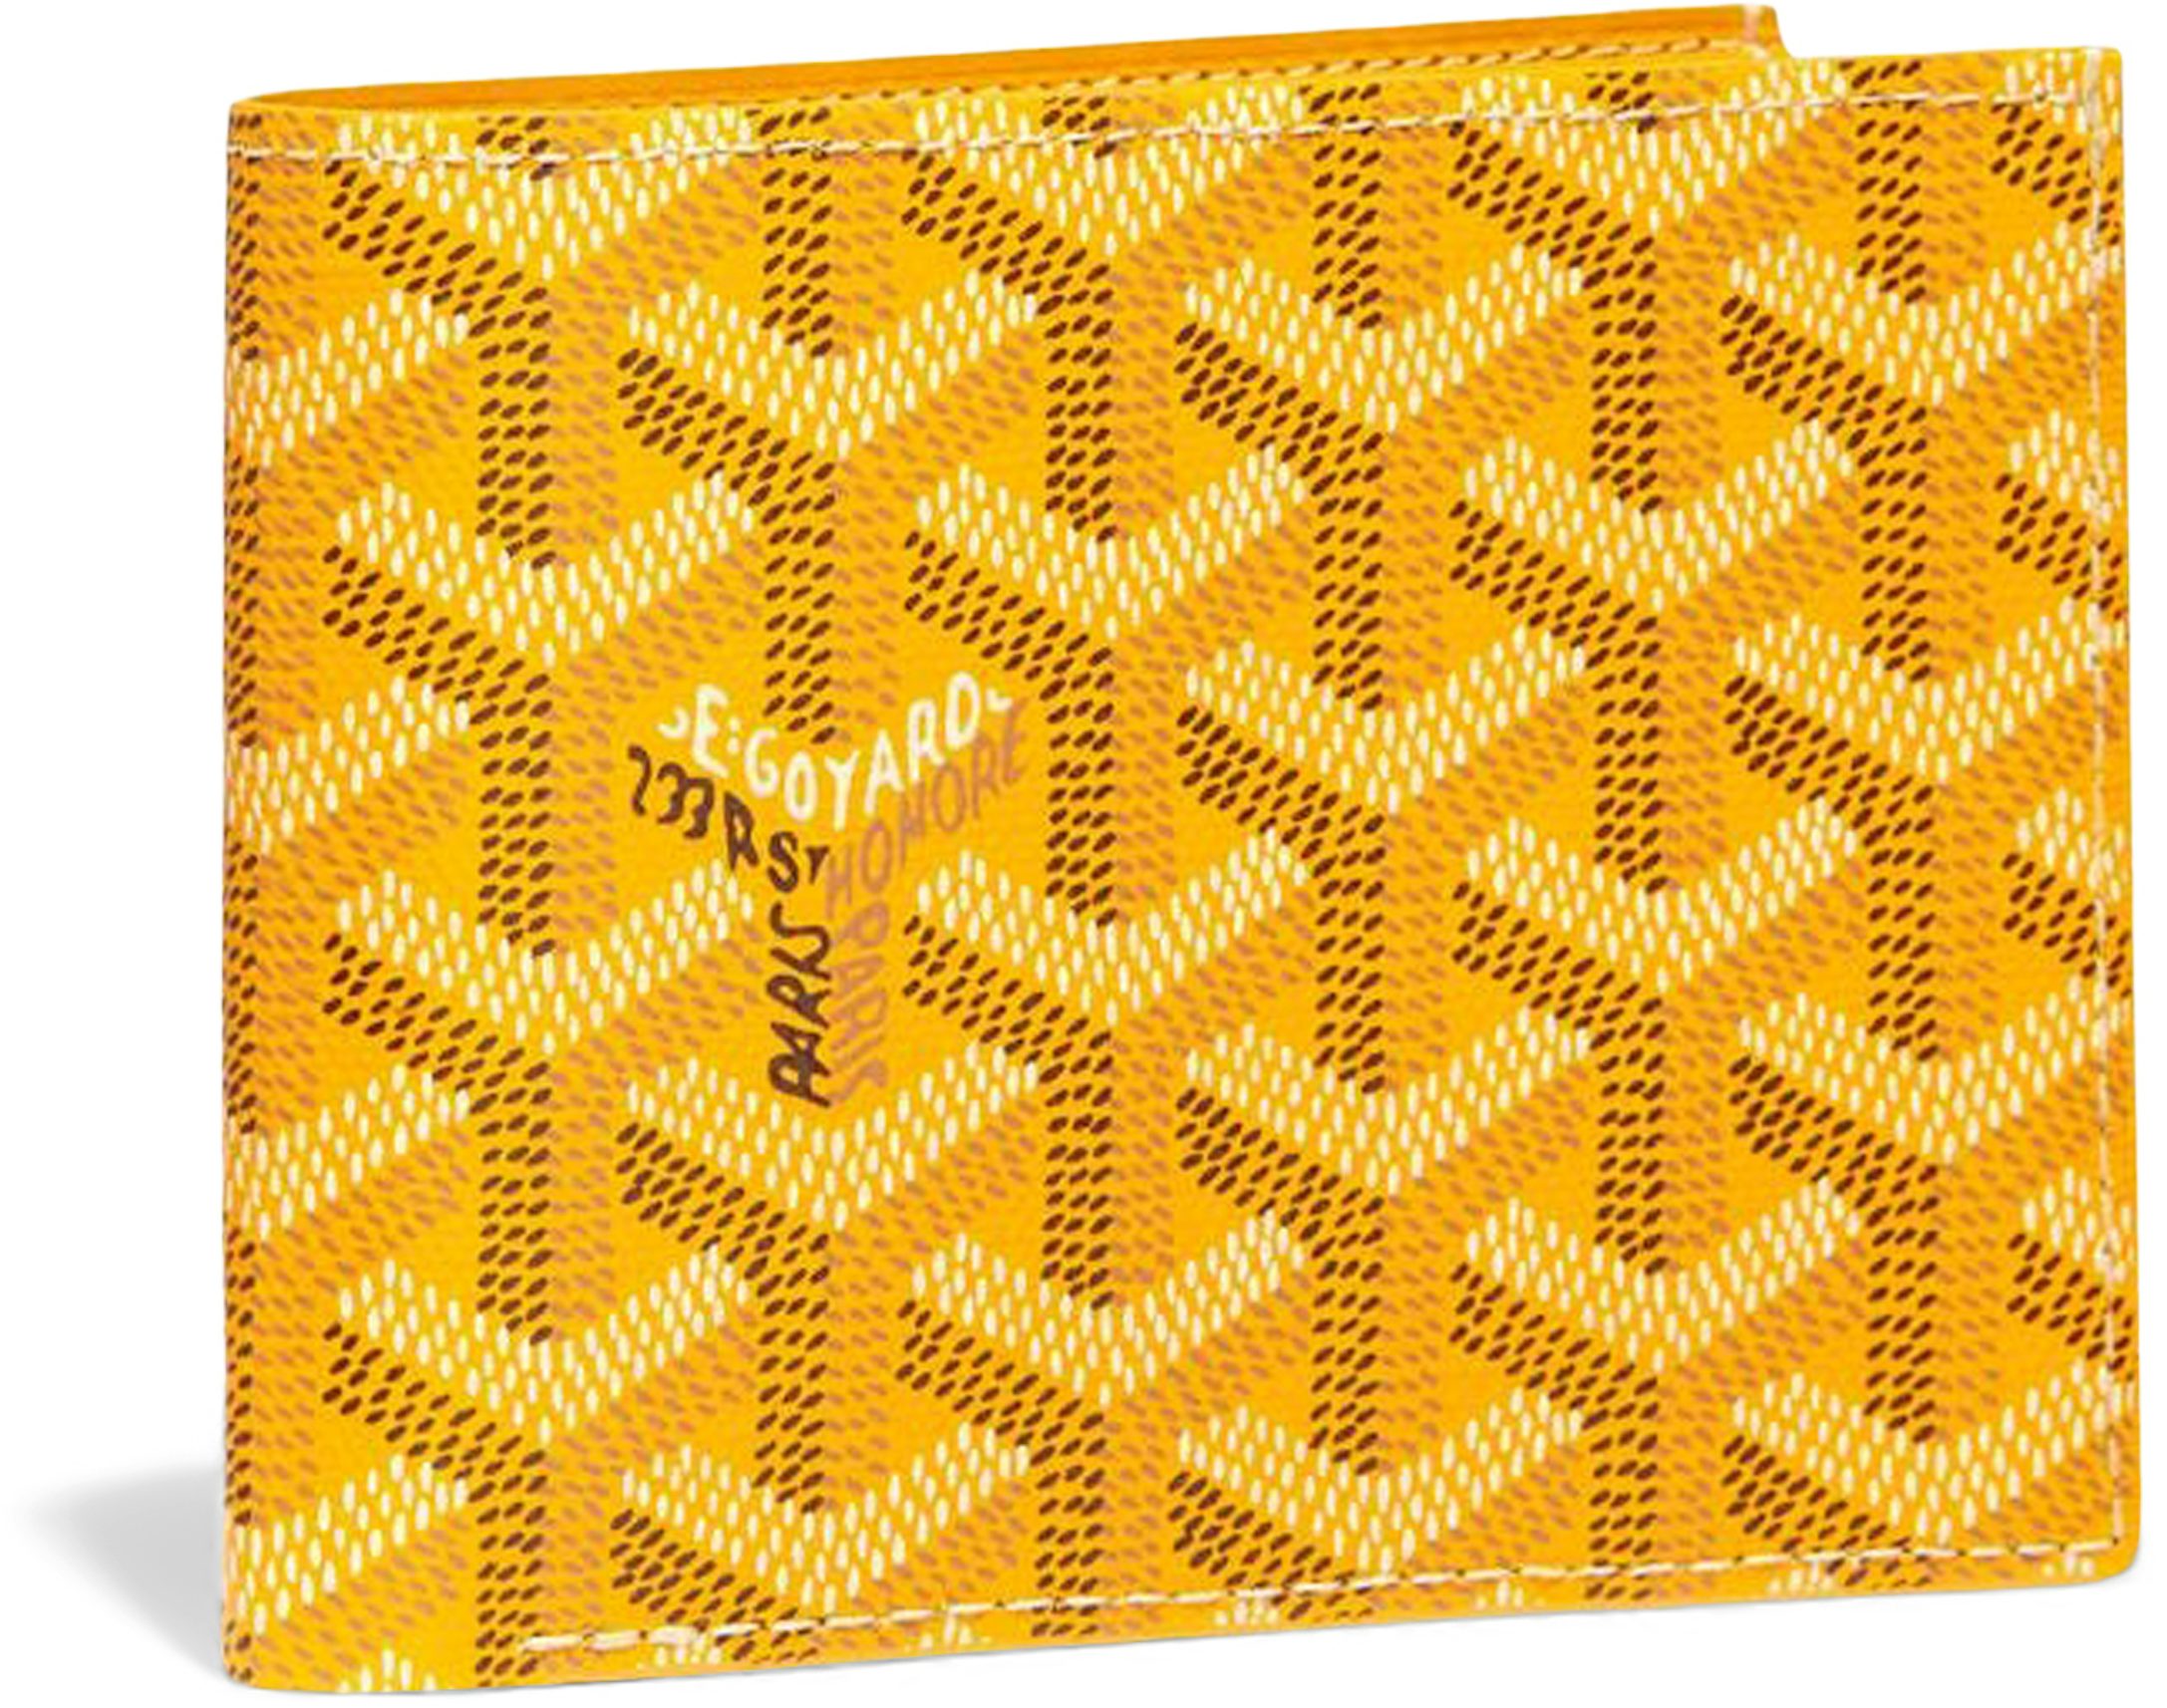 Goyard Victoire Wallet Yellow in Canvas/Calfskin - US